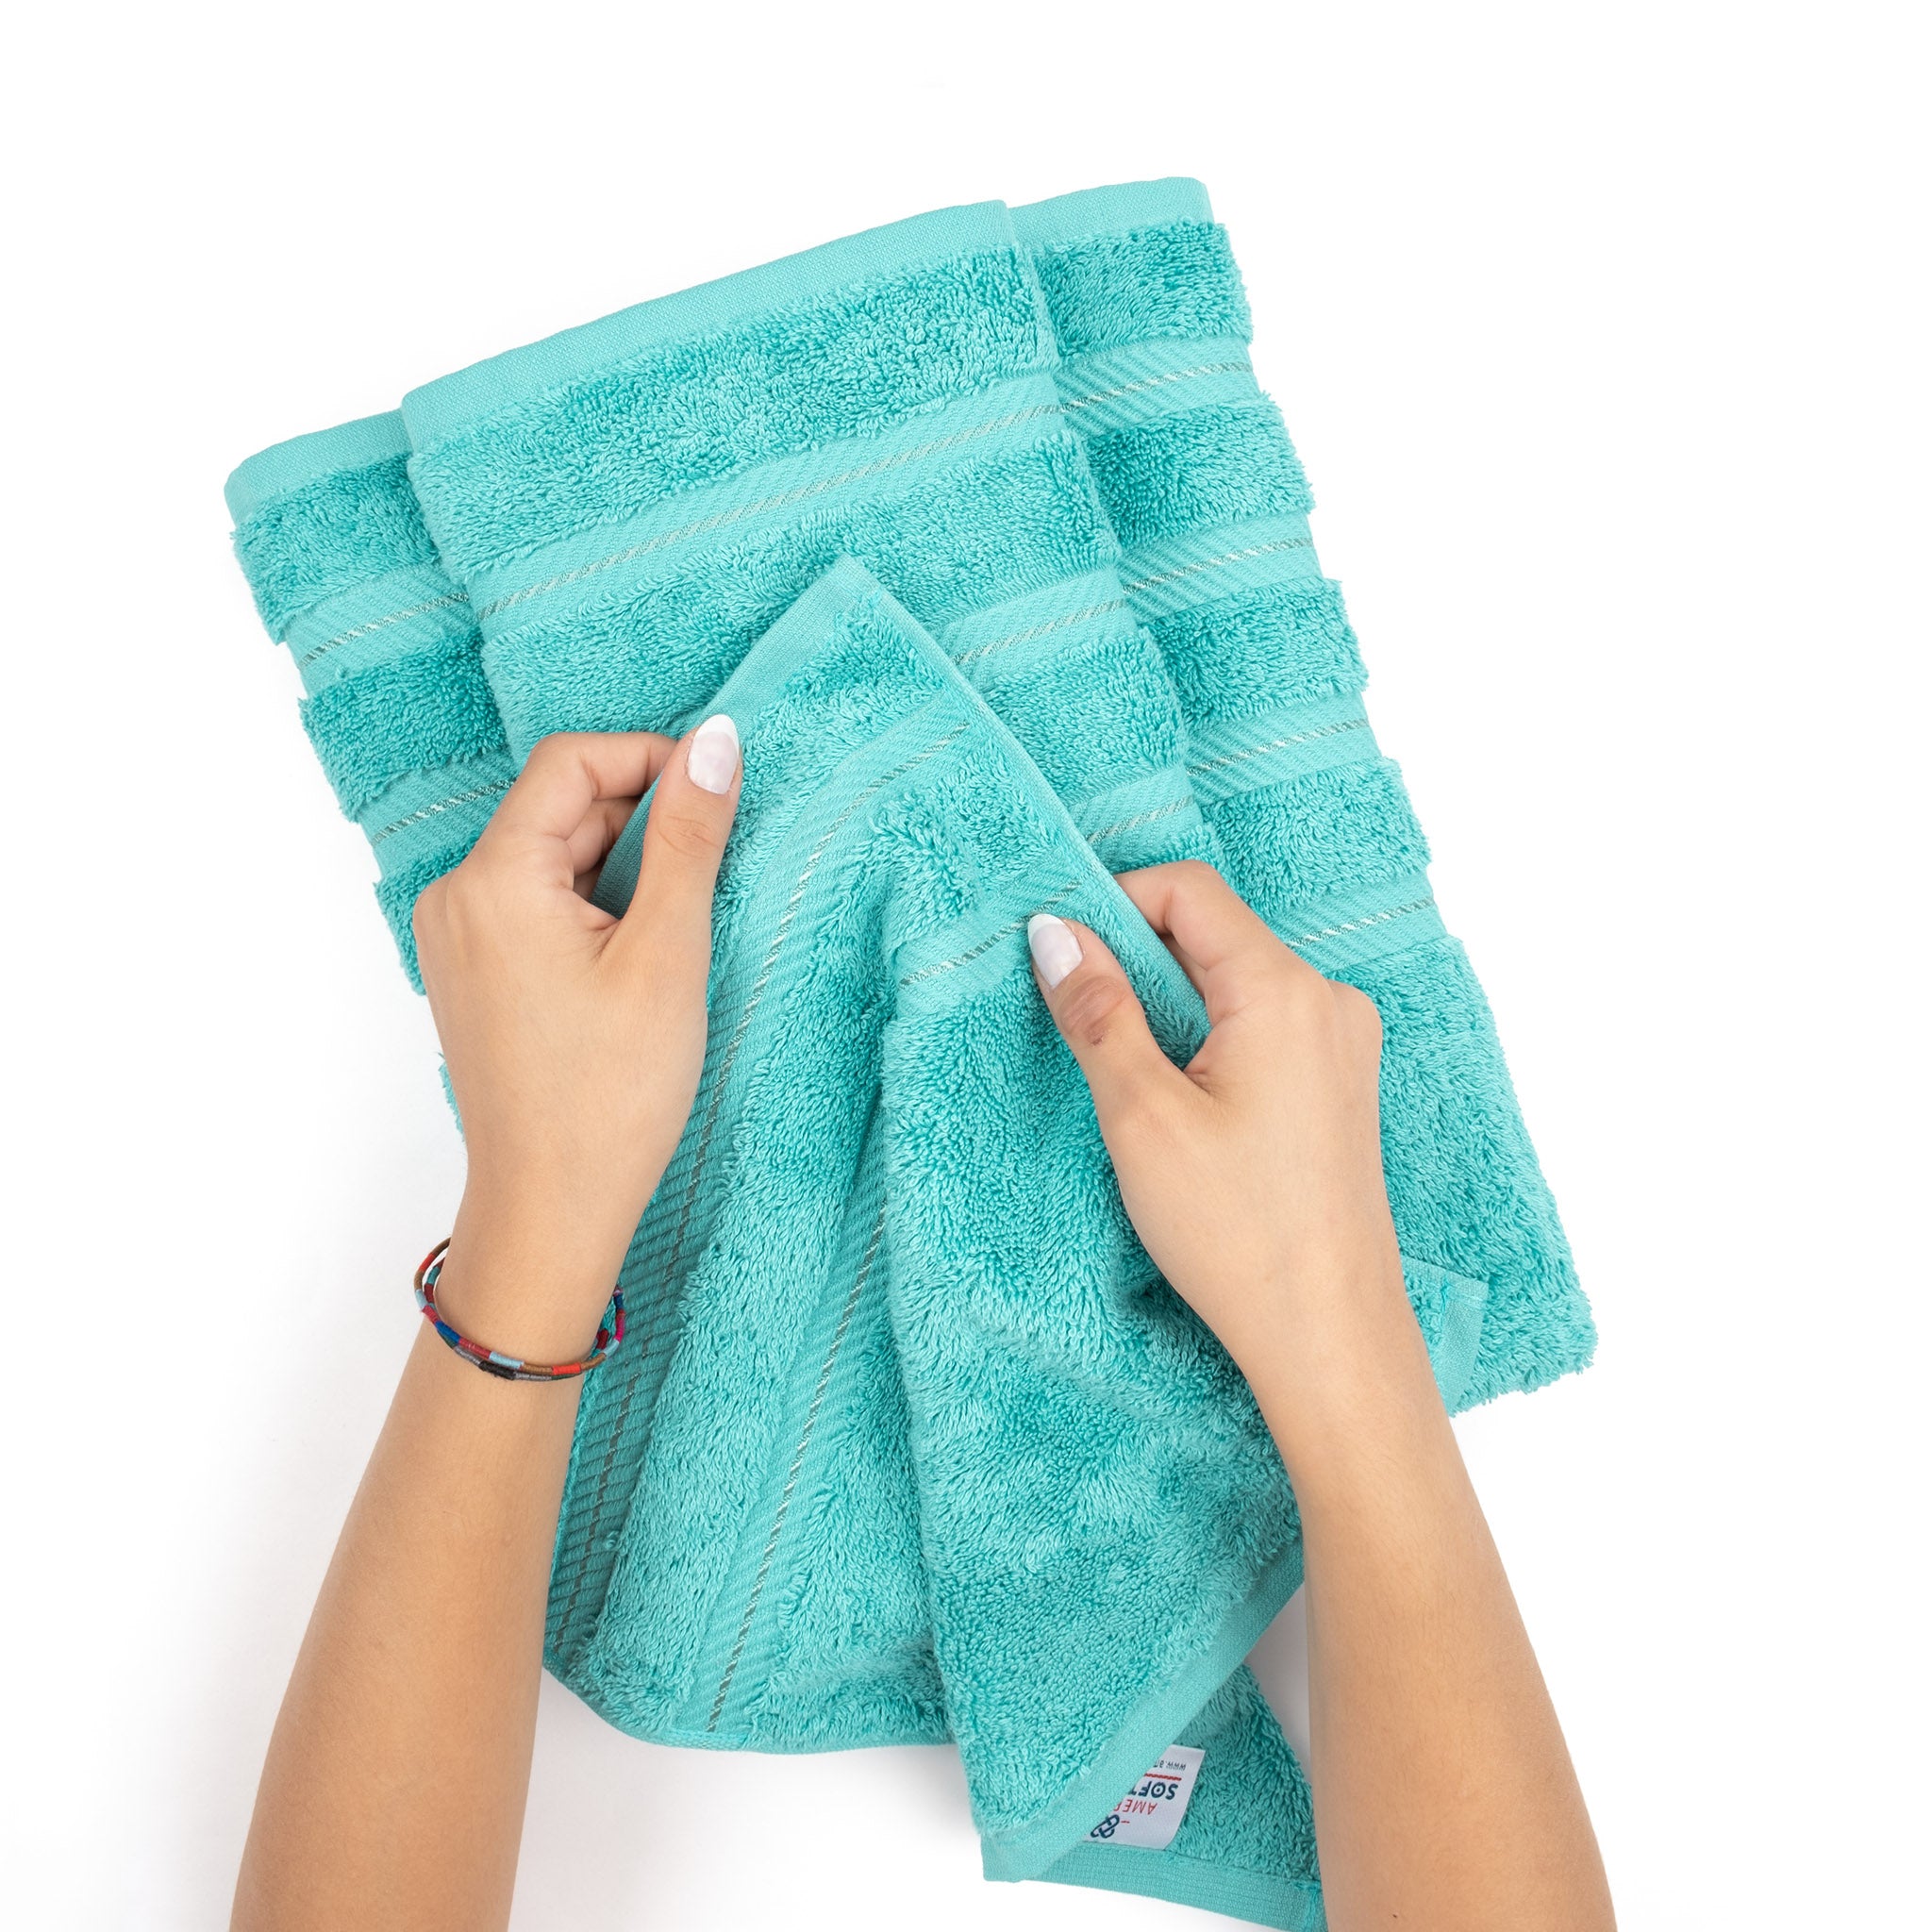  American Soft Linen Oversized Bath Sheet 40x80, Jumbo Large Bath  Towels for Bathroom, 100% Ringspun Cotton Bath Sheet for Adults, Bath  Sheets Towels, Turquoise Blue Bath Sheet : Home & Kitchen